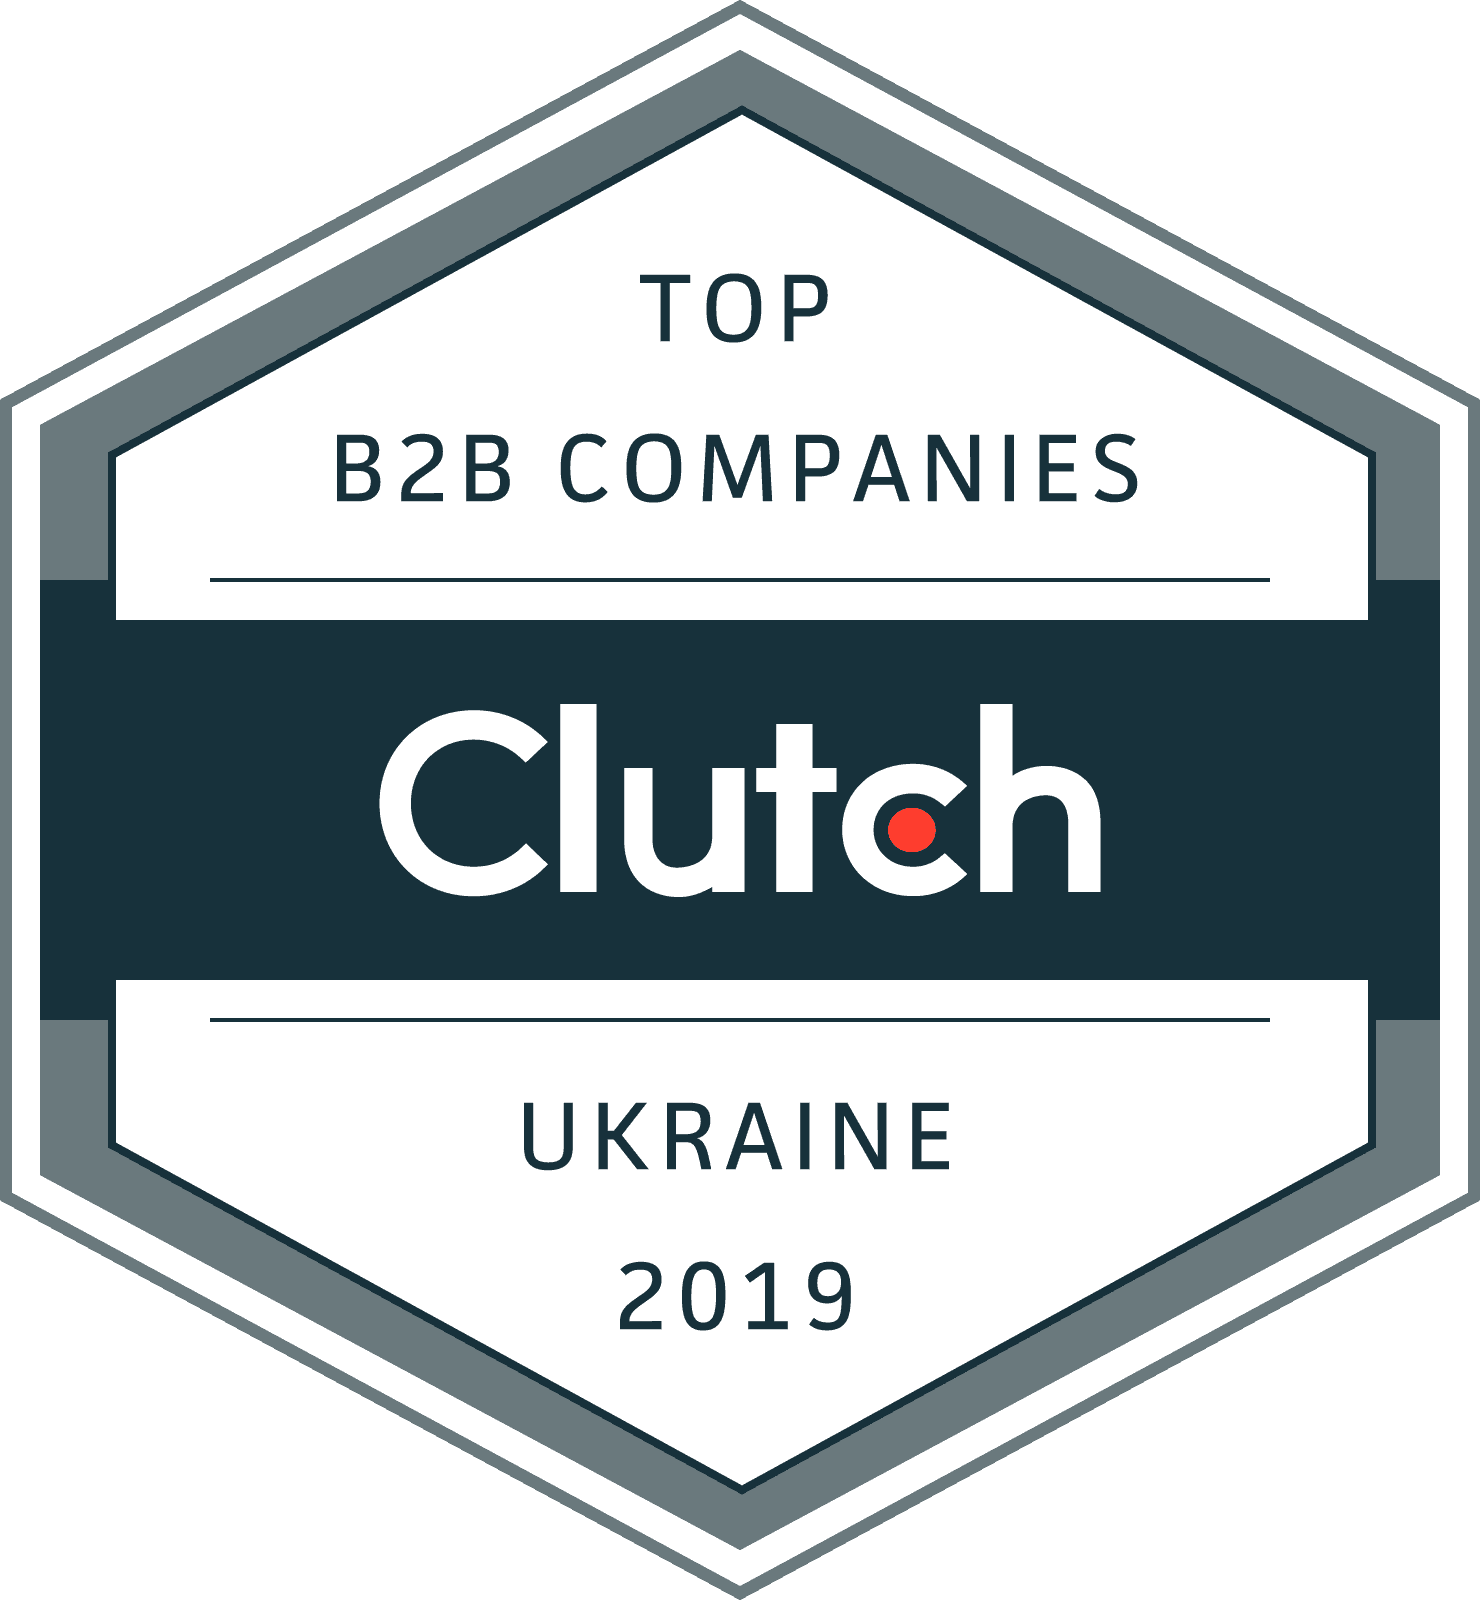 Top B2B Companies in Ukraine 2019 by Clutch